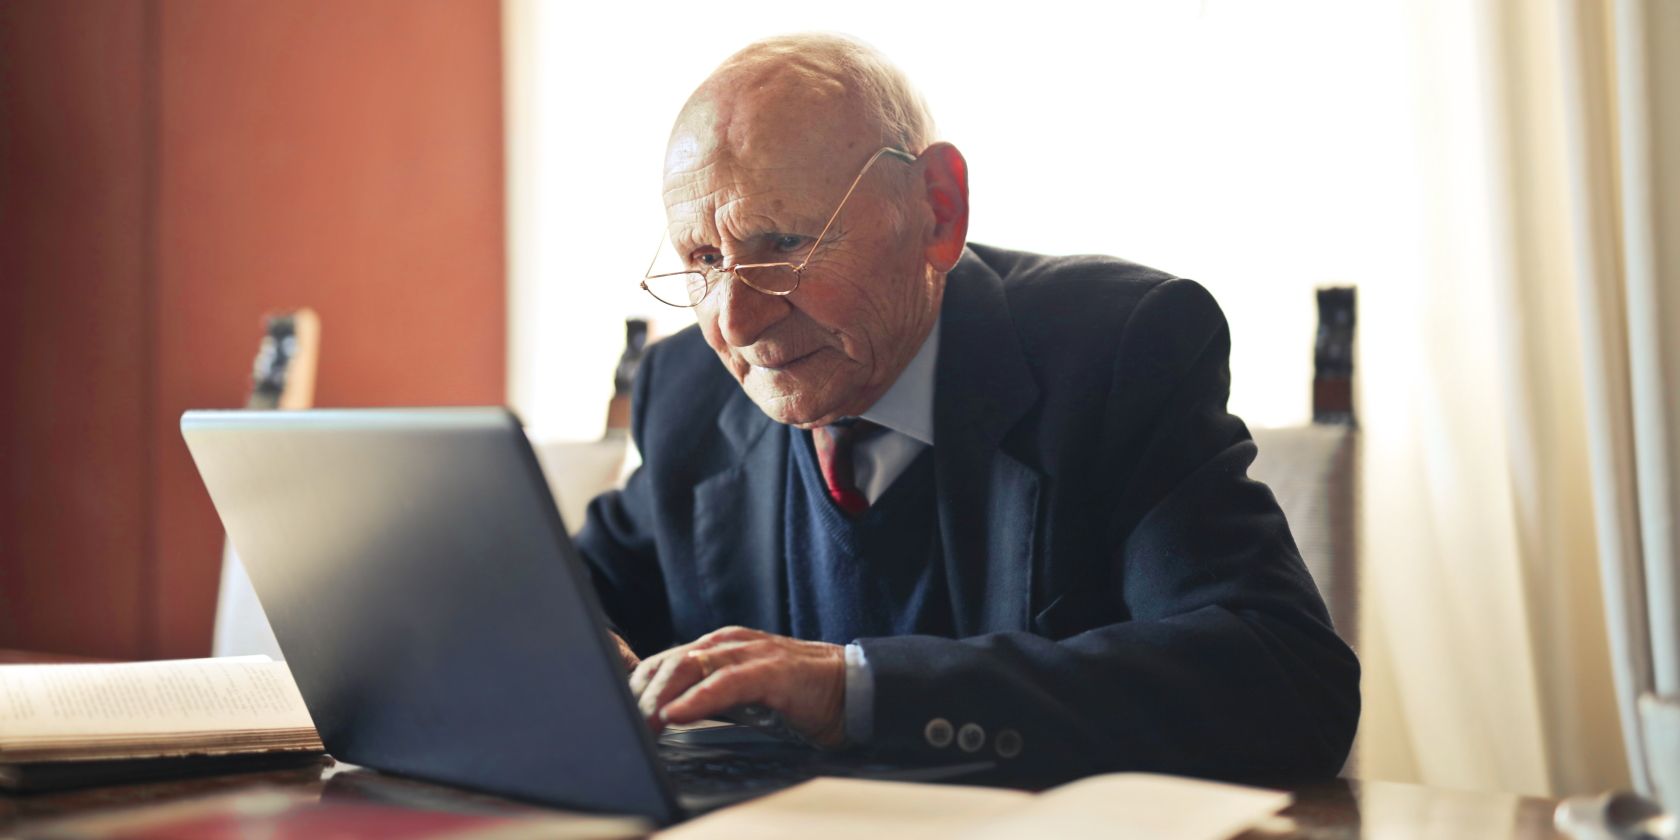 Elderly Man with Glasses on Black Laptop